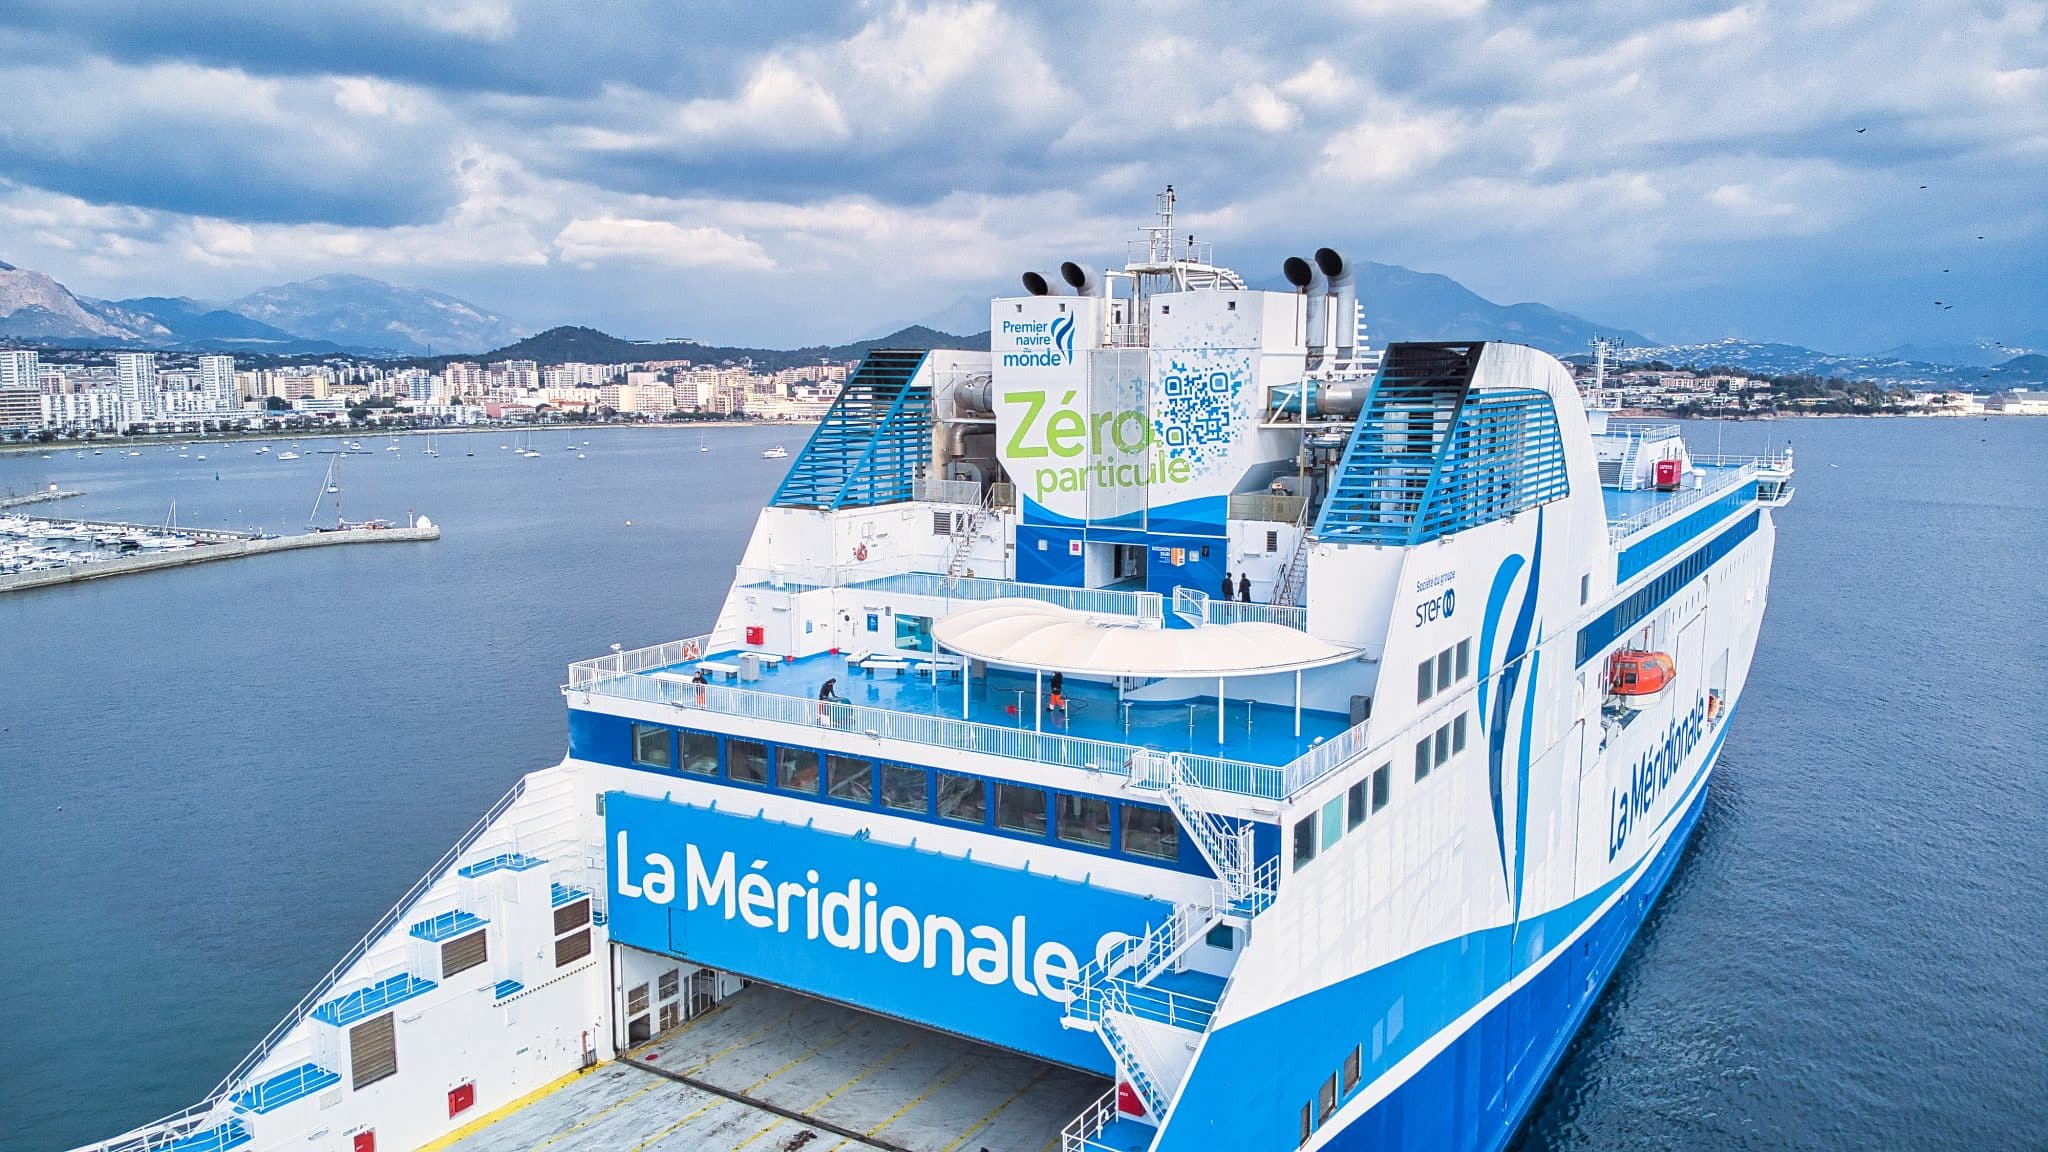 Transport maritime : un ferry zéro particule en Méditerranée